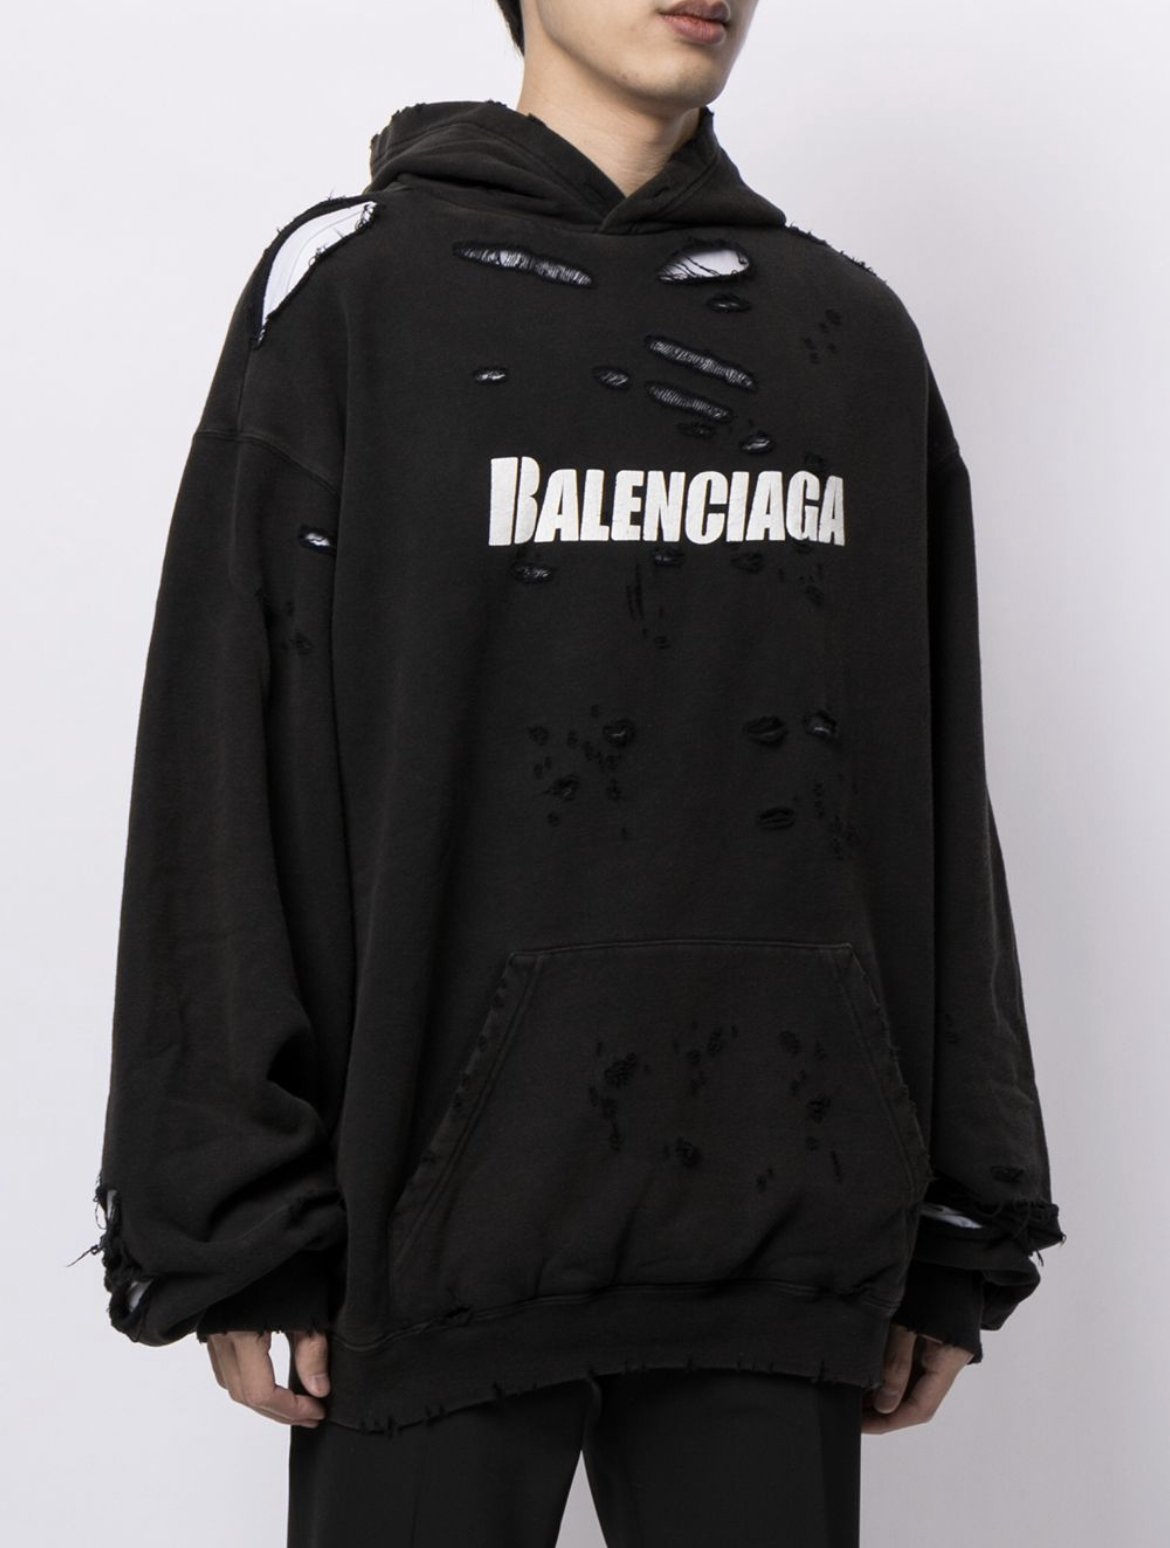 Balenciaga ripped oversize logo hoodie